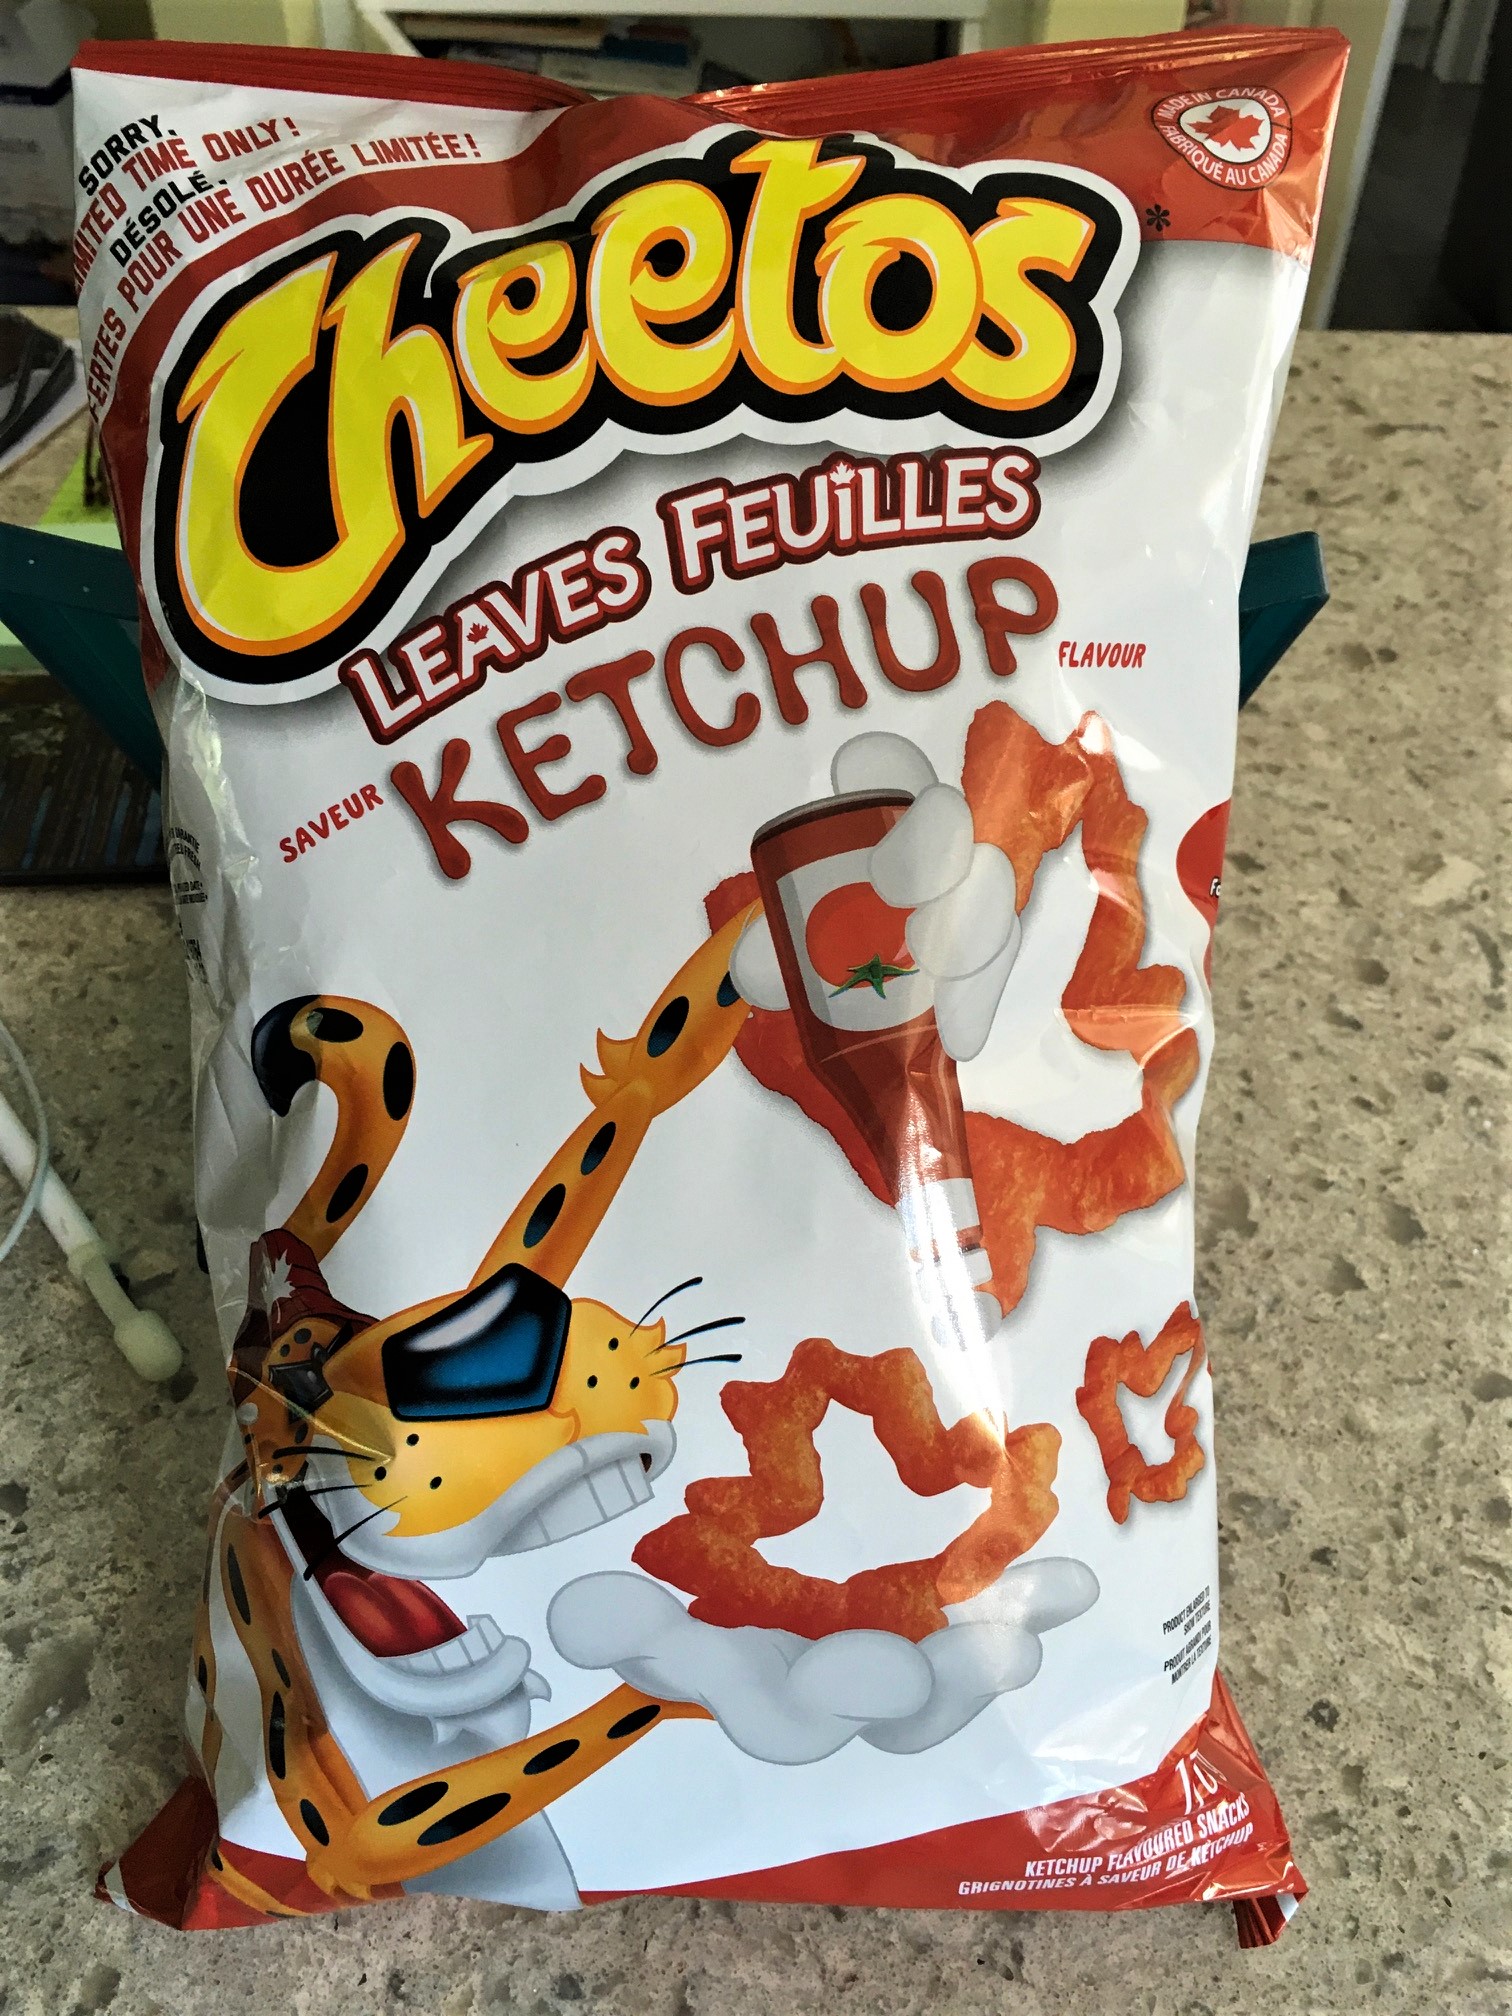 Ketchup-flavoured Cheetos